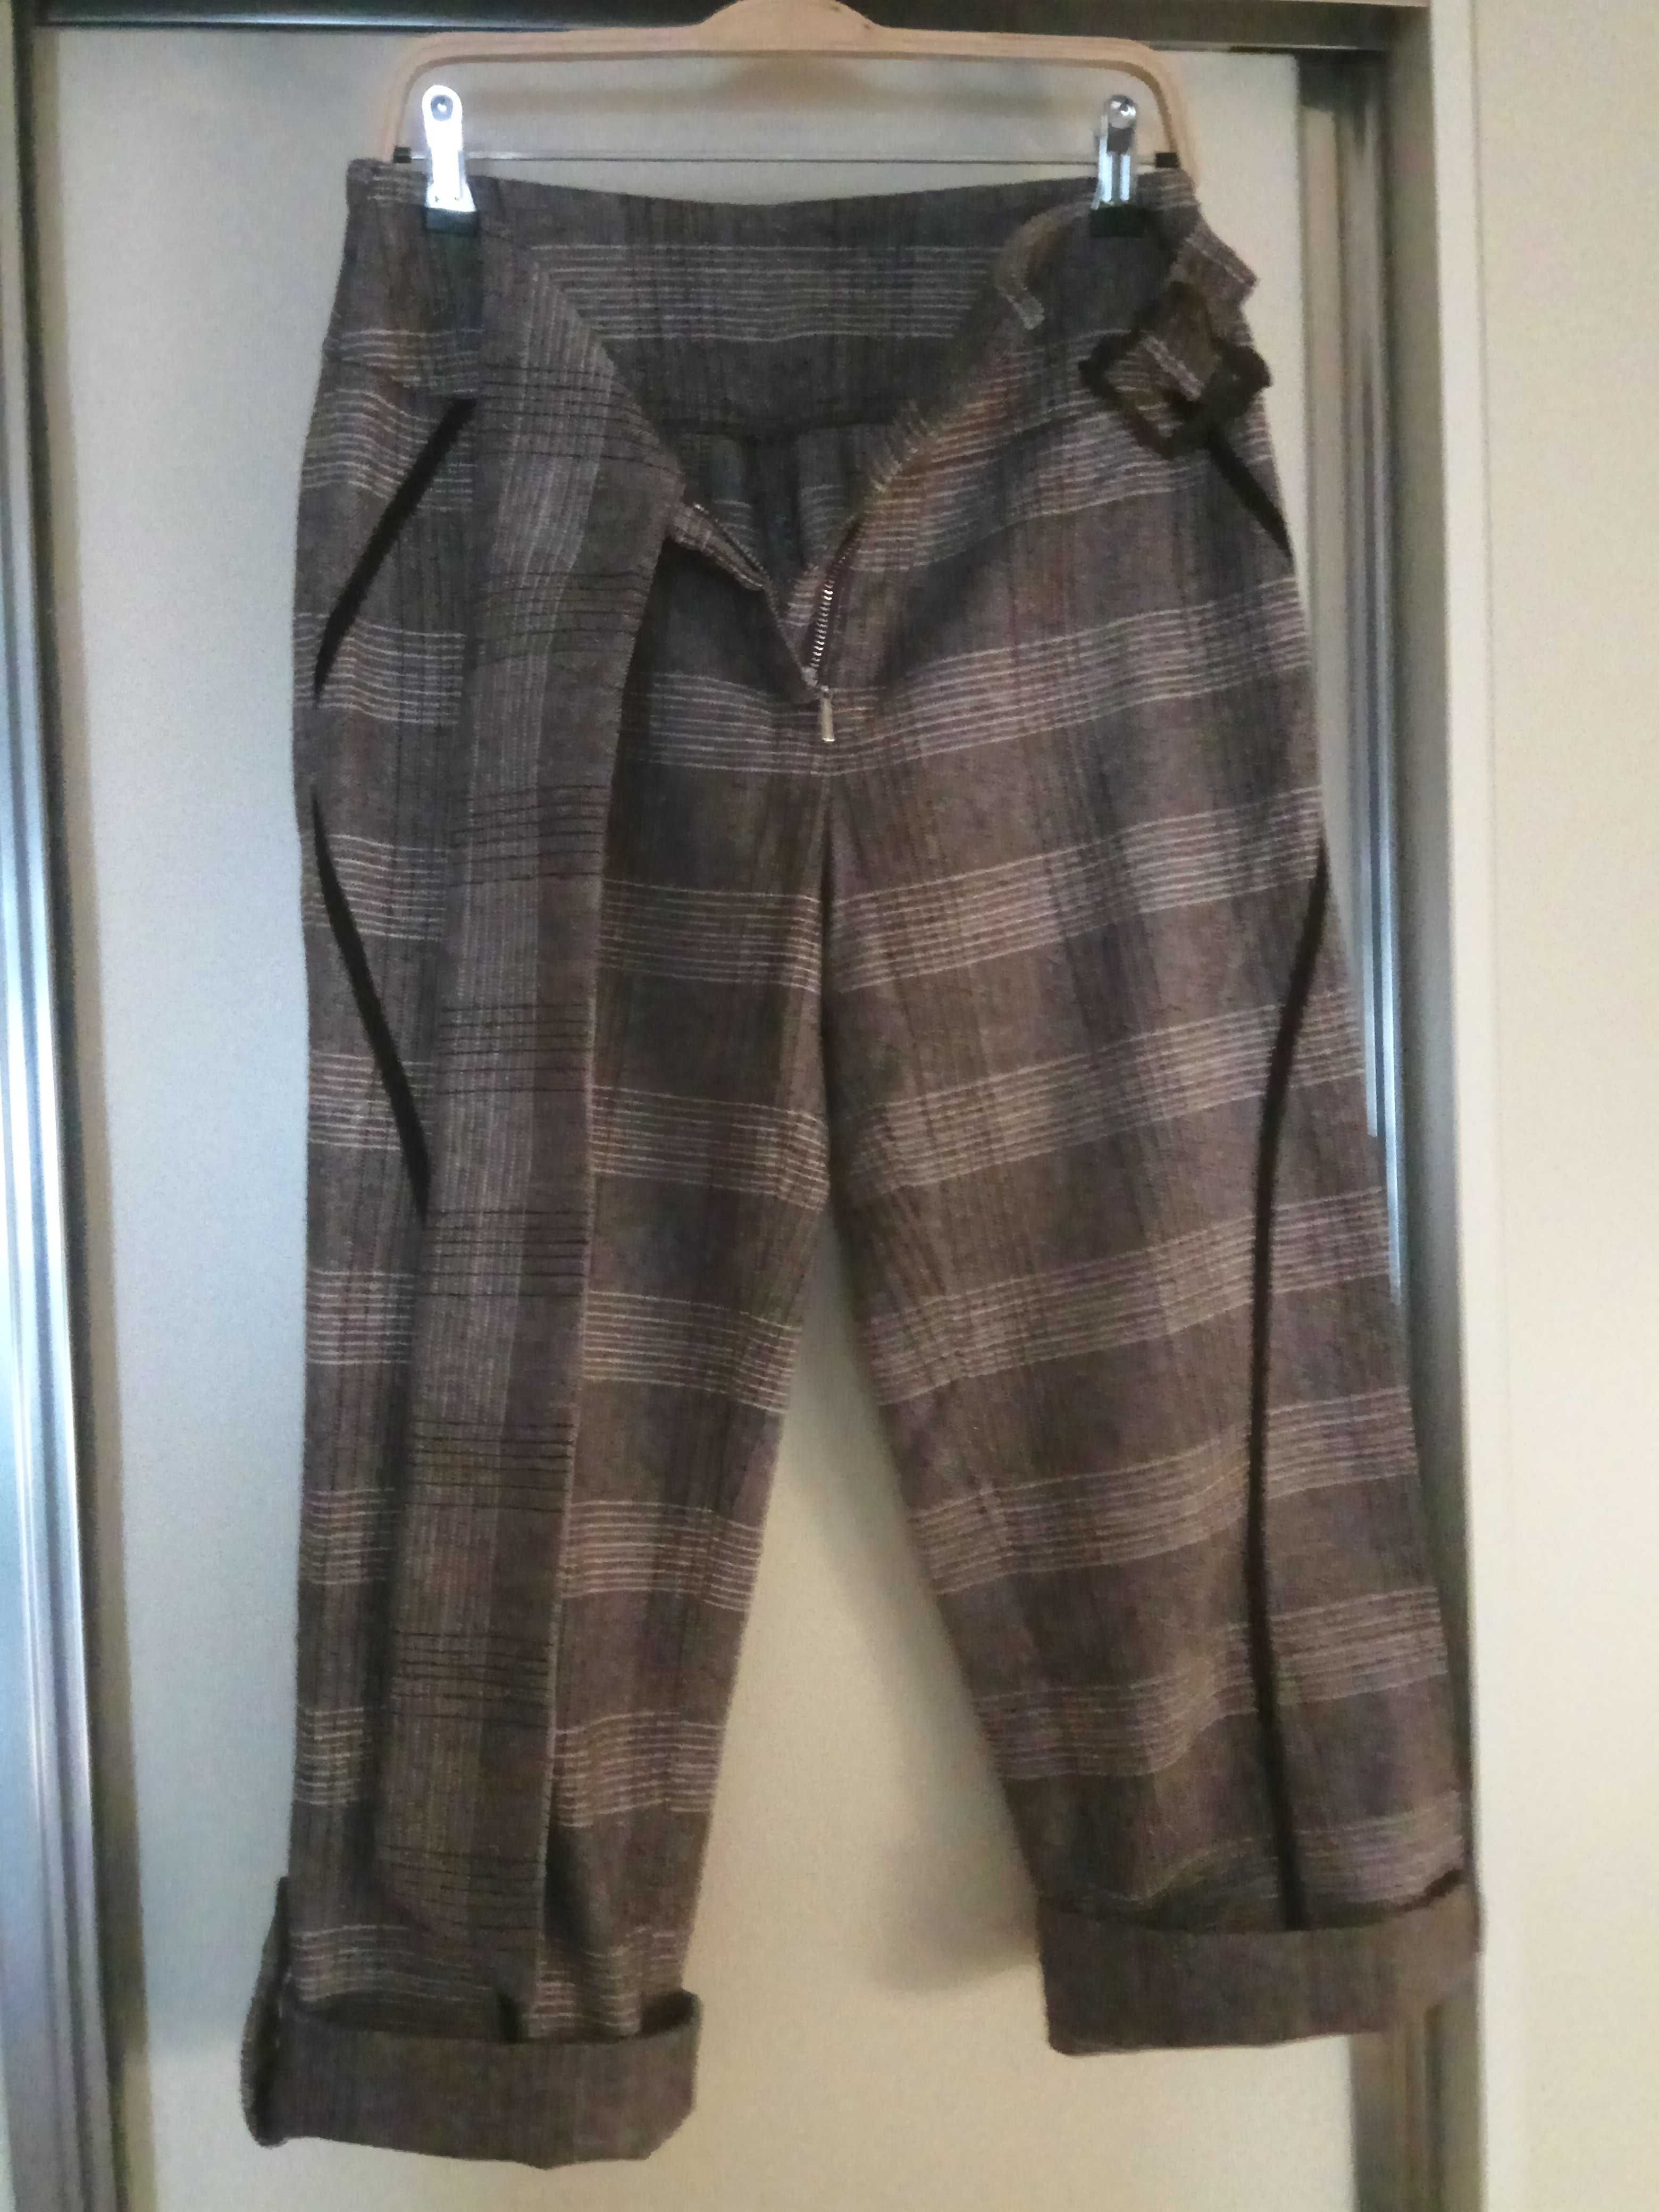 Pantaloni 3/4, cu lana, maro, mar.38-40 (M).